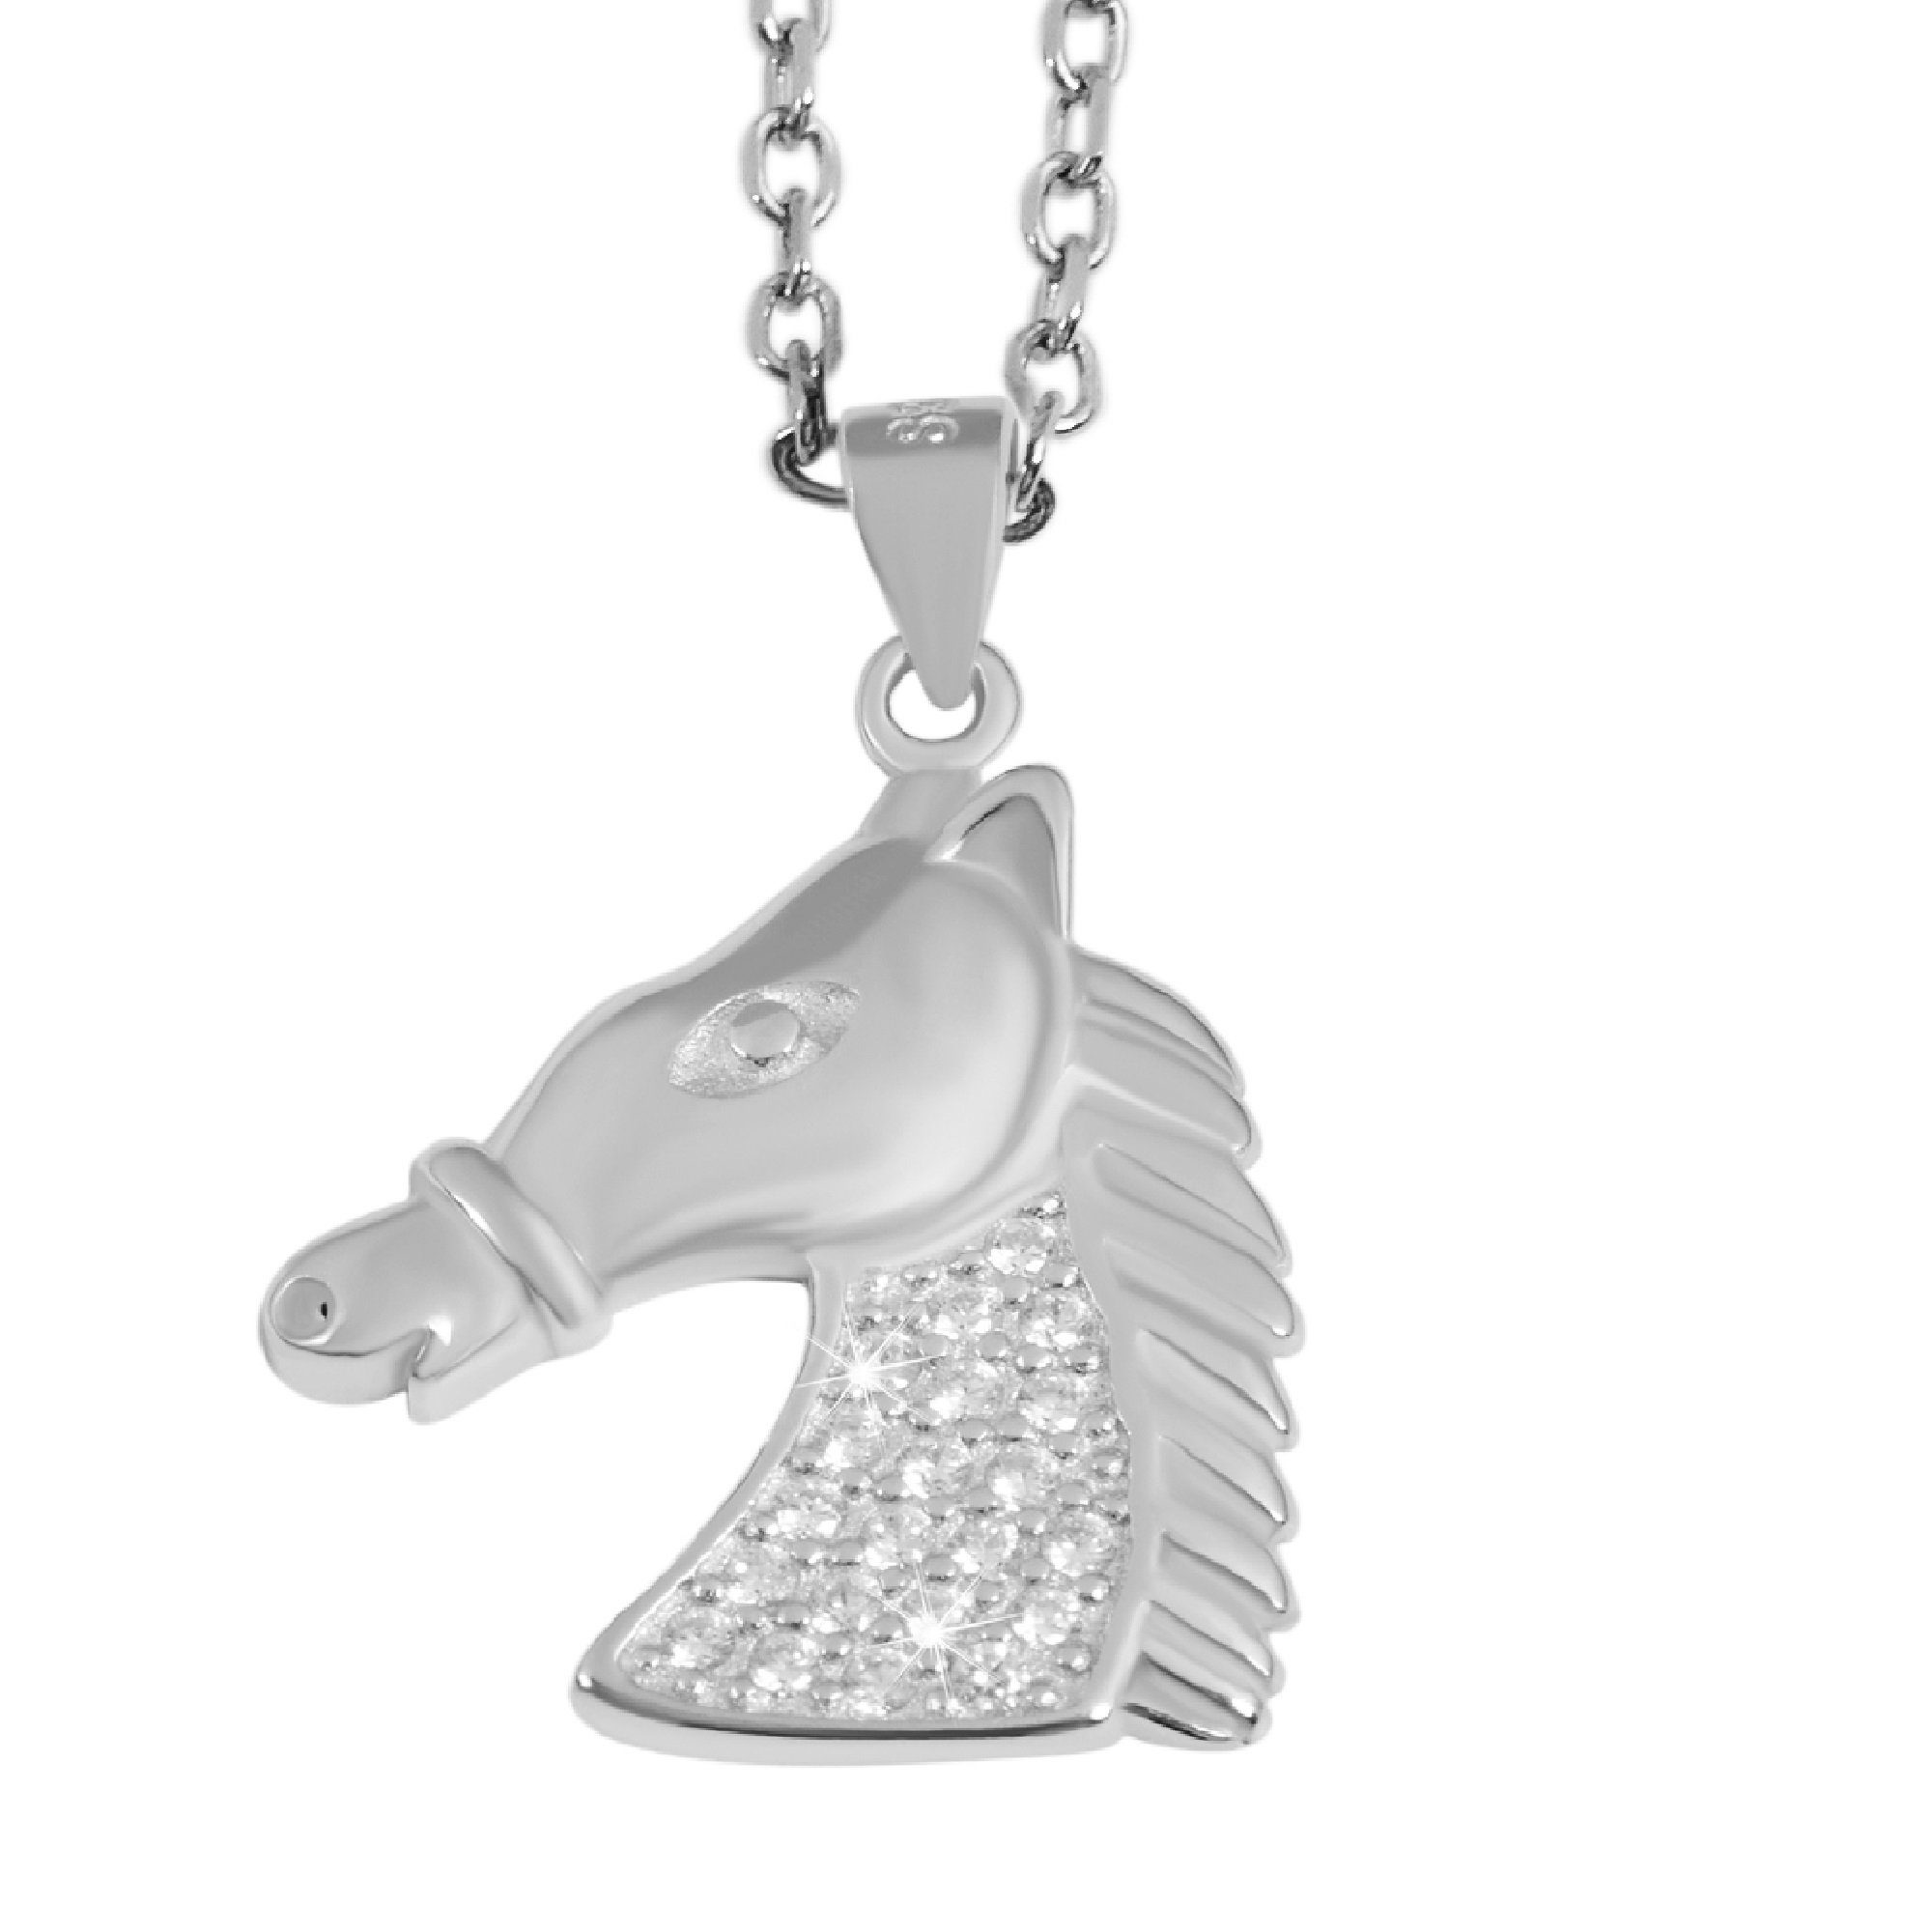 Adelia´s Kettenanhänger Anhänger Pferd aus 925 Silber mit Zirkonia,  Trendiger moderner Schmuck